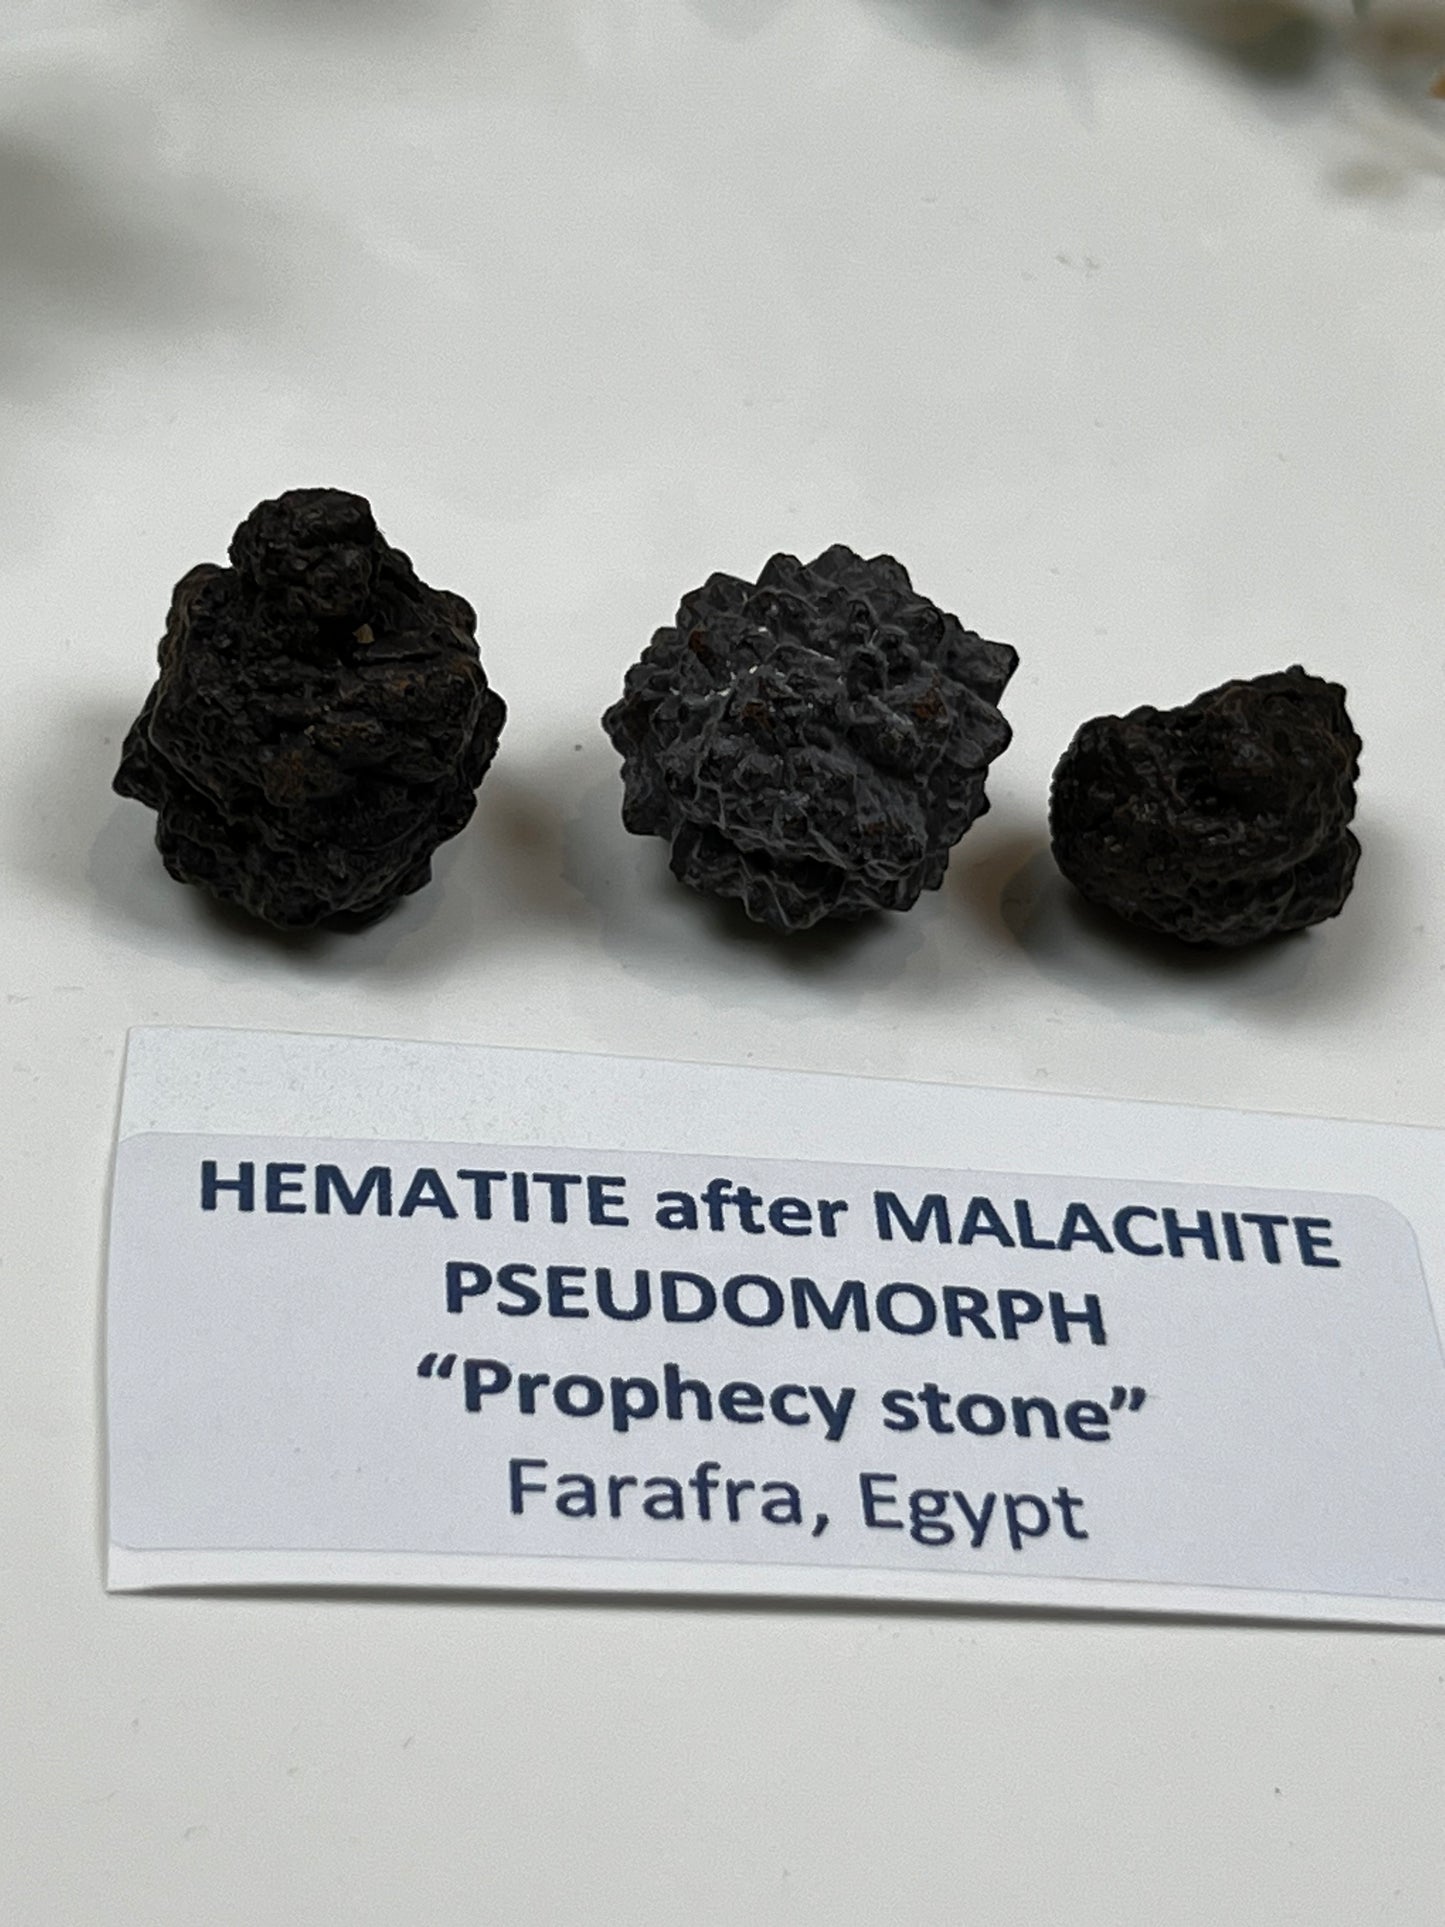 Prophecy stone Hematite after Malachite